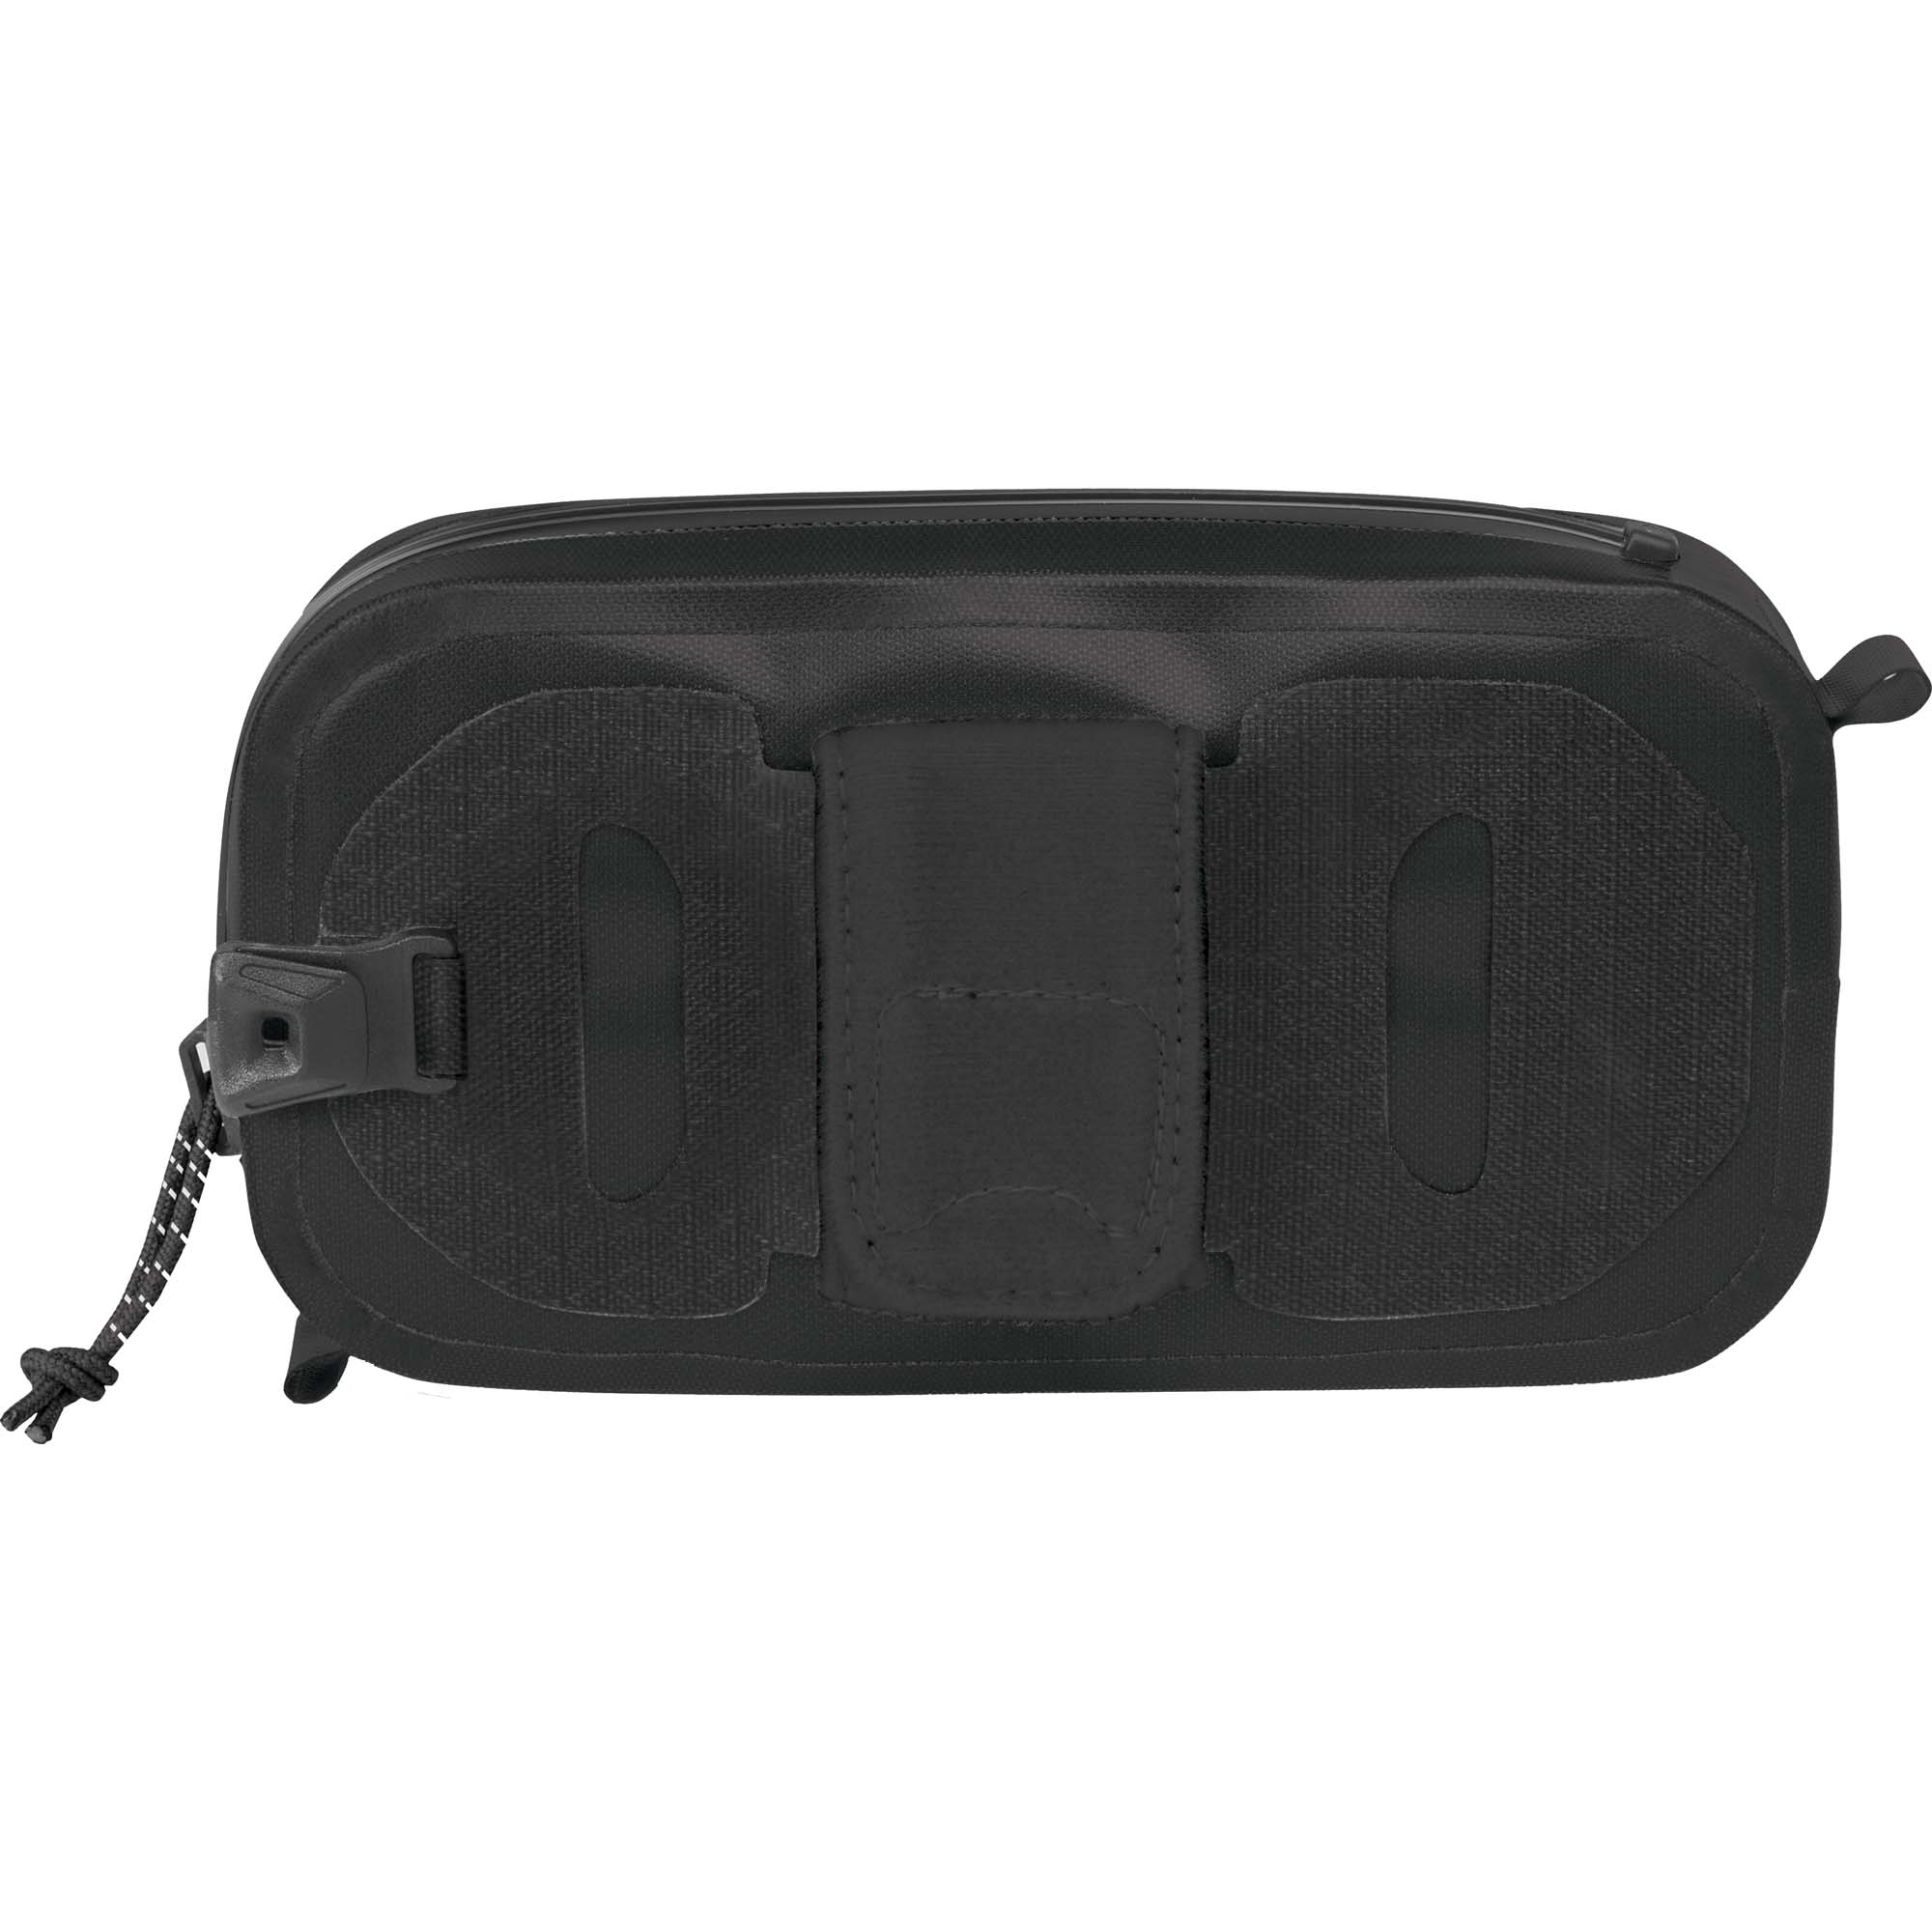 Osprey Pack Pocket Waterproof Add-On Storage